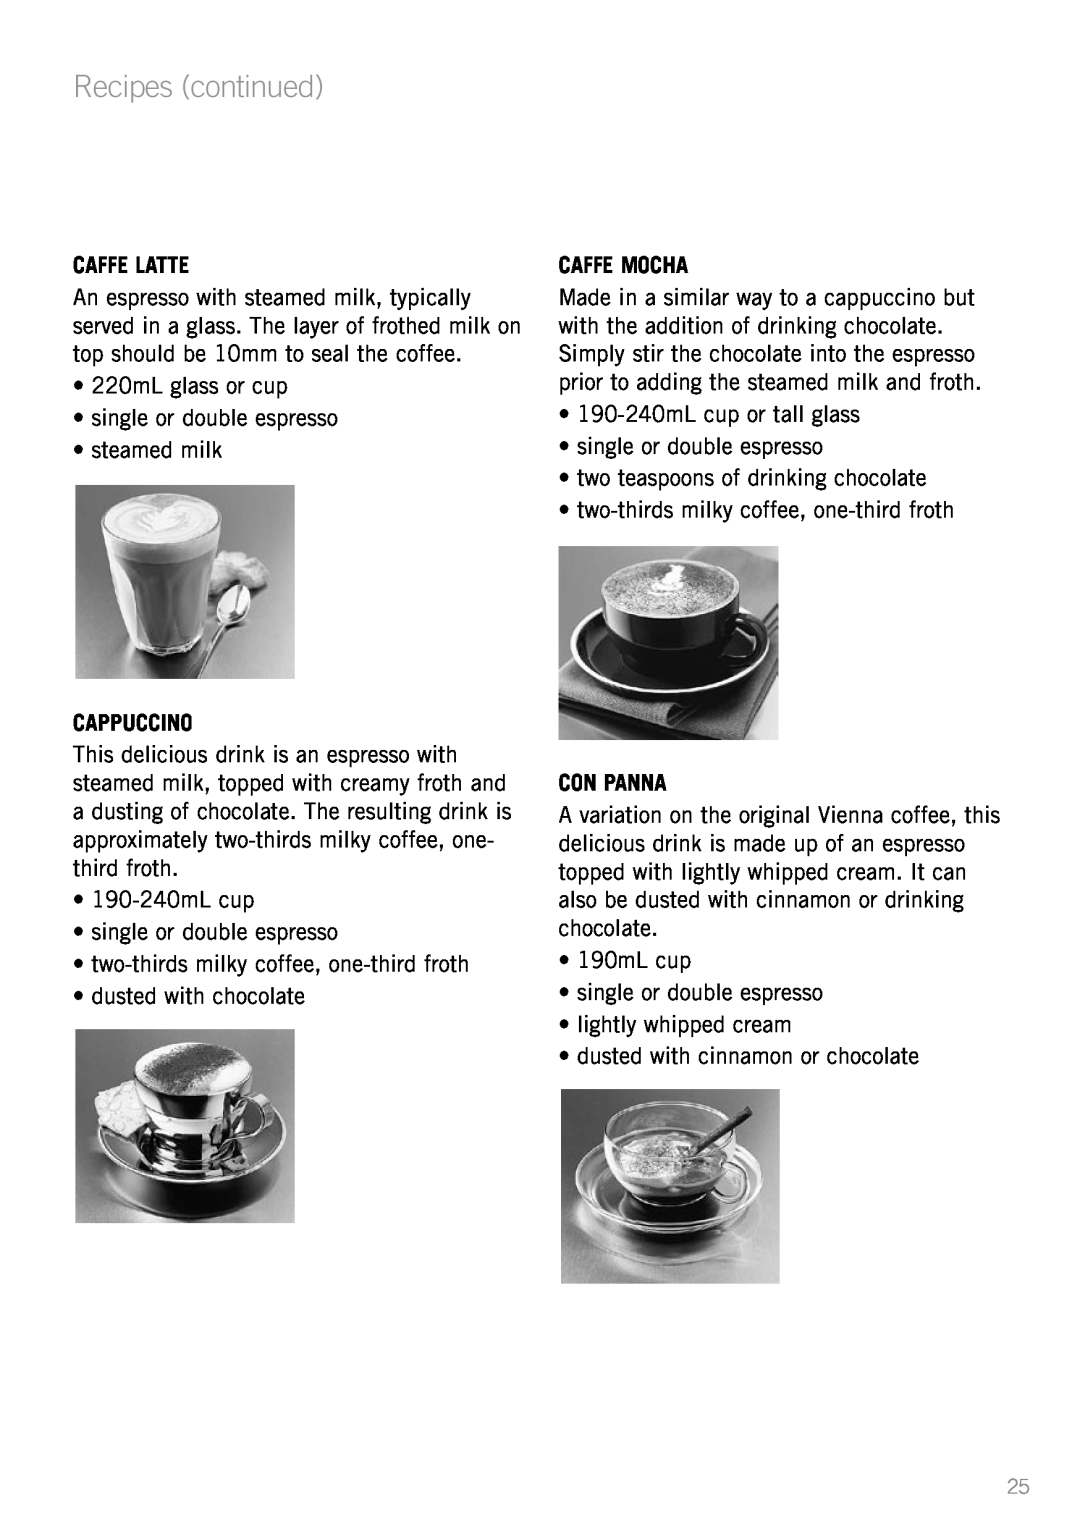 Sunbeam EM5400B manual Recipes continued, Caffe Latte, Caffe Mocha, Cappuccino, Con Panna 